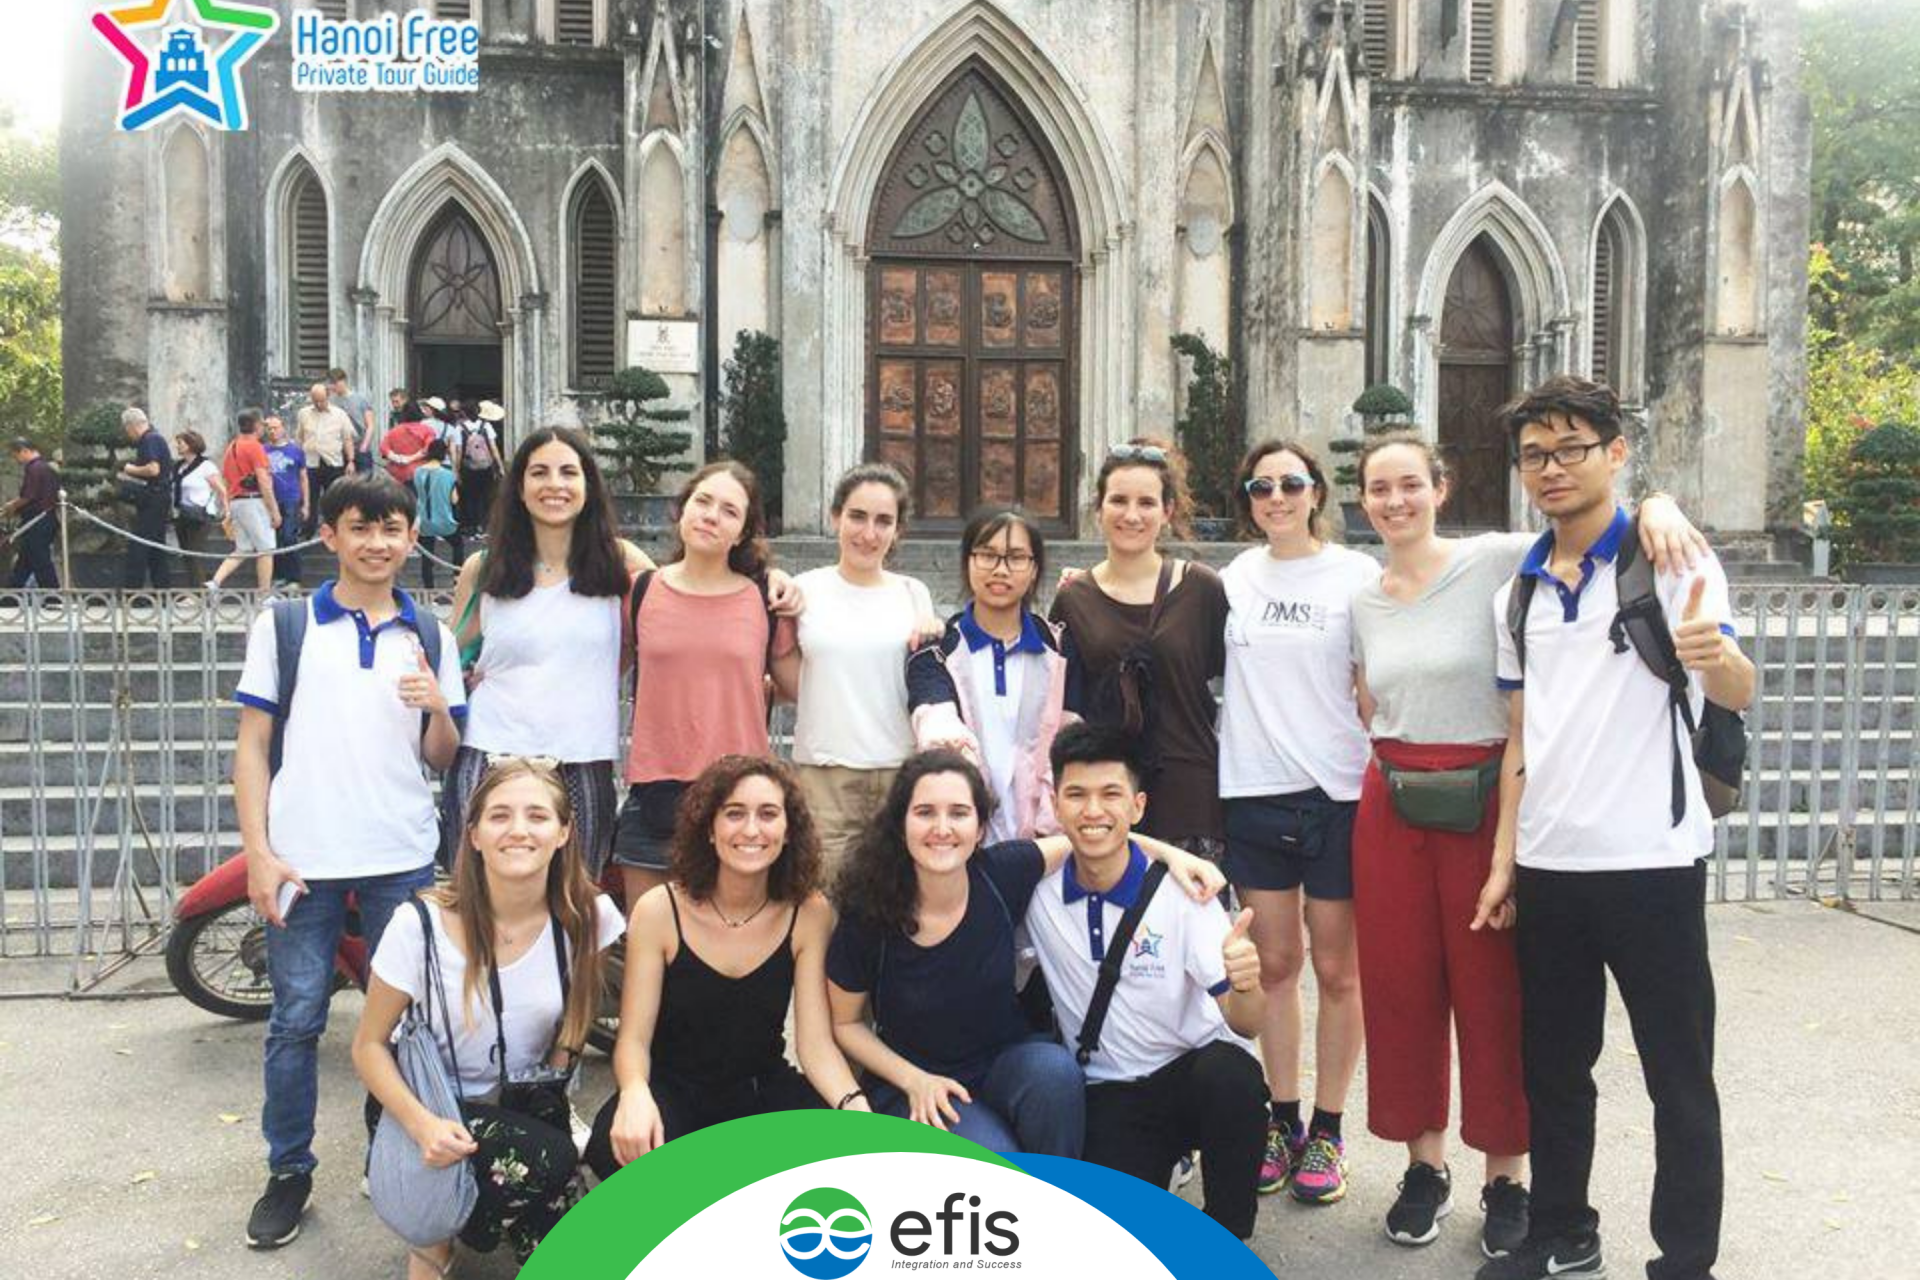 câu chuyện ra đời của hanoi free private tour guide efis english học tiếng anh dẫn tour